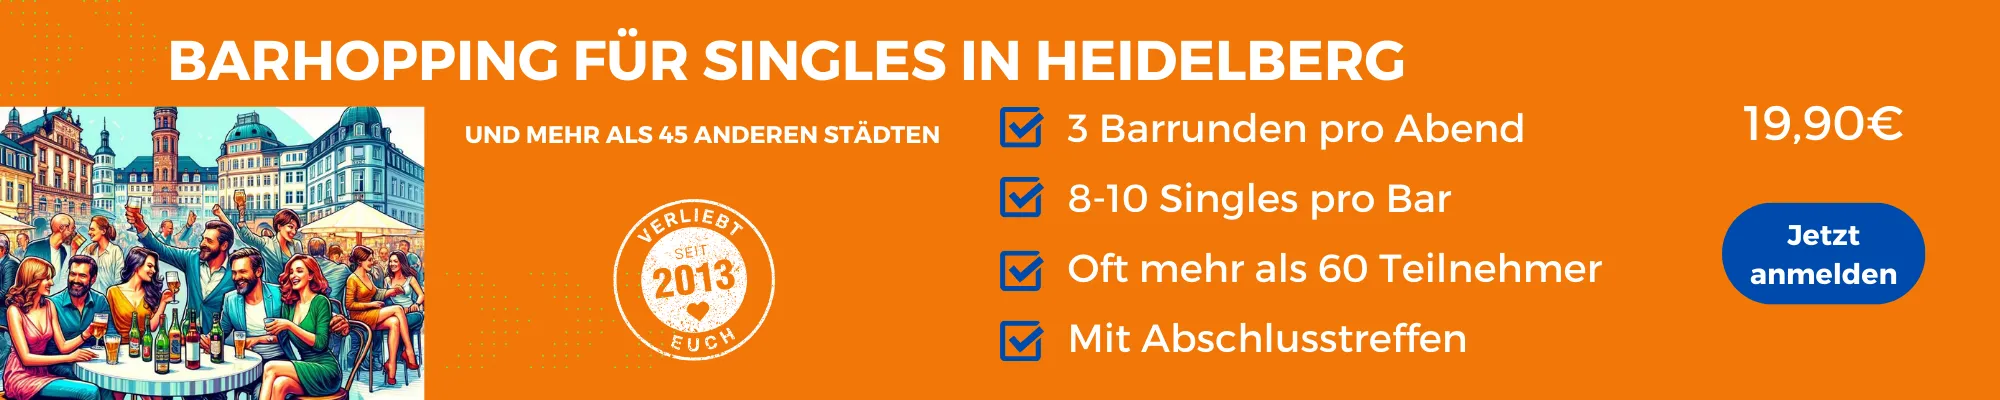 Face to Face Heidelberg: Barhopping für Singles in Heidelberg